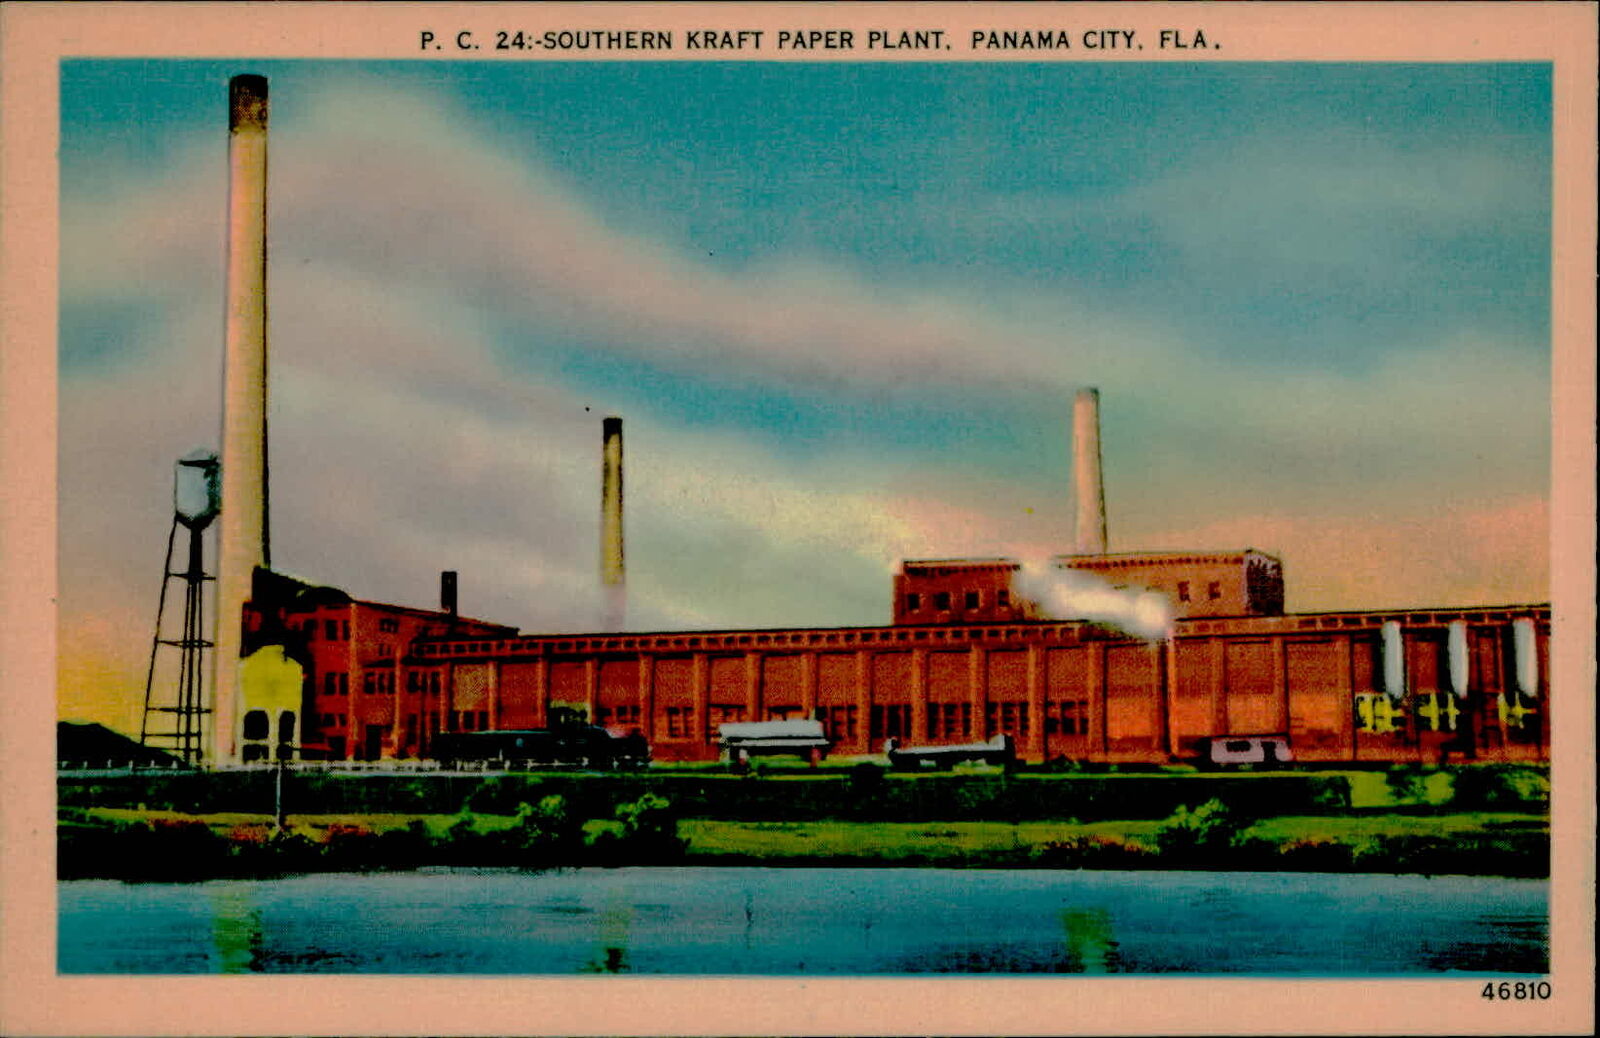 Postcard: P. C. 24:-SOUTHERN KRAFT PAPER PLANT, PANAMA CITY. FLA.